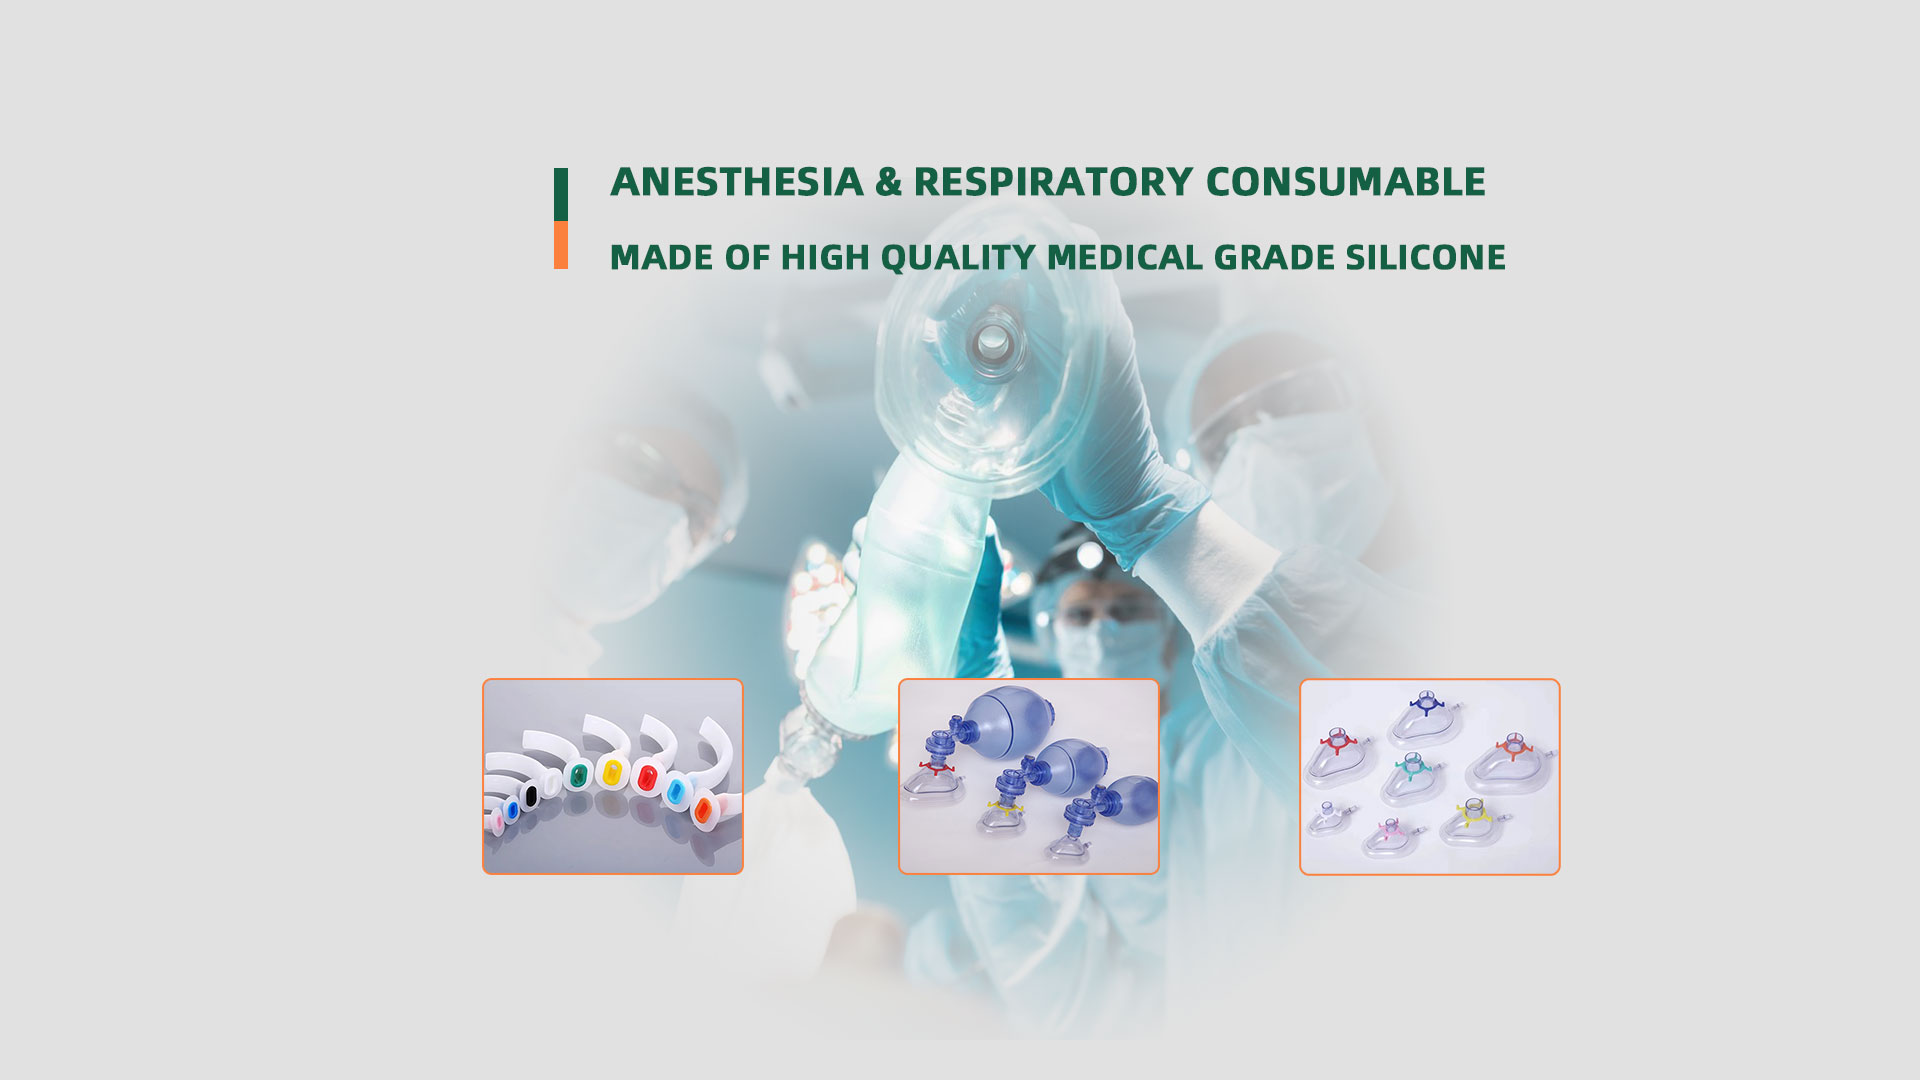 Anesthesia & Respiratory Consumable